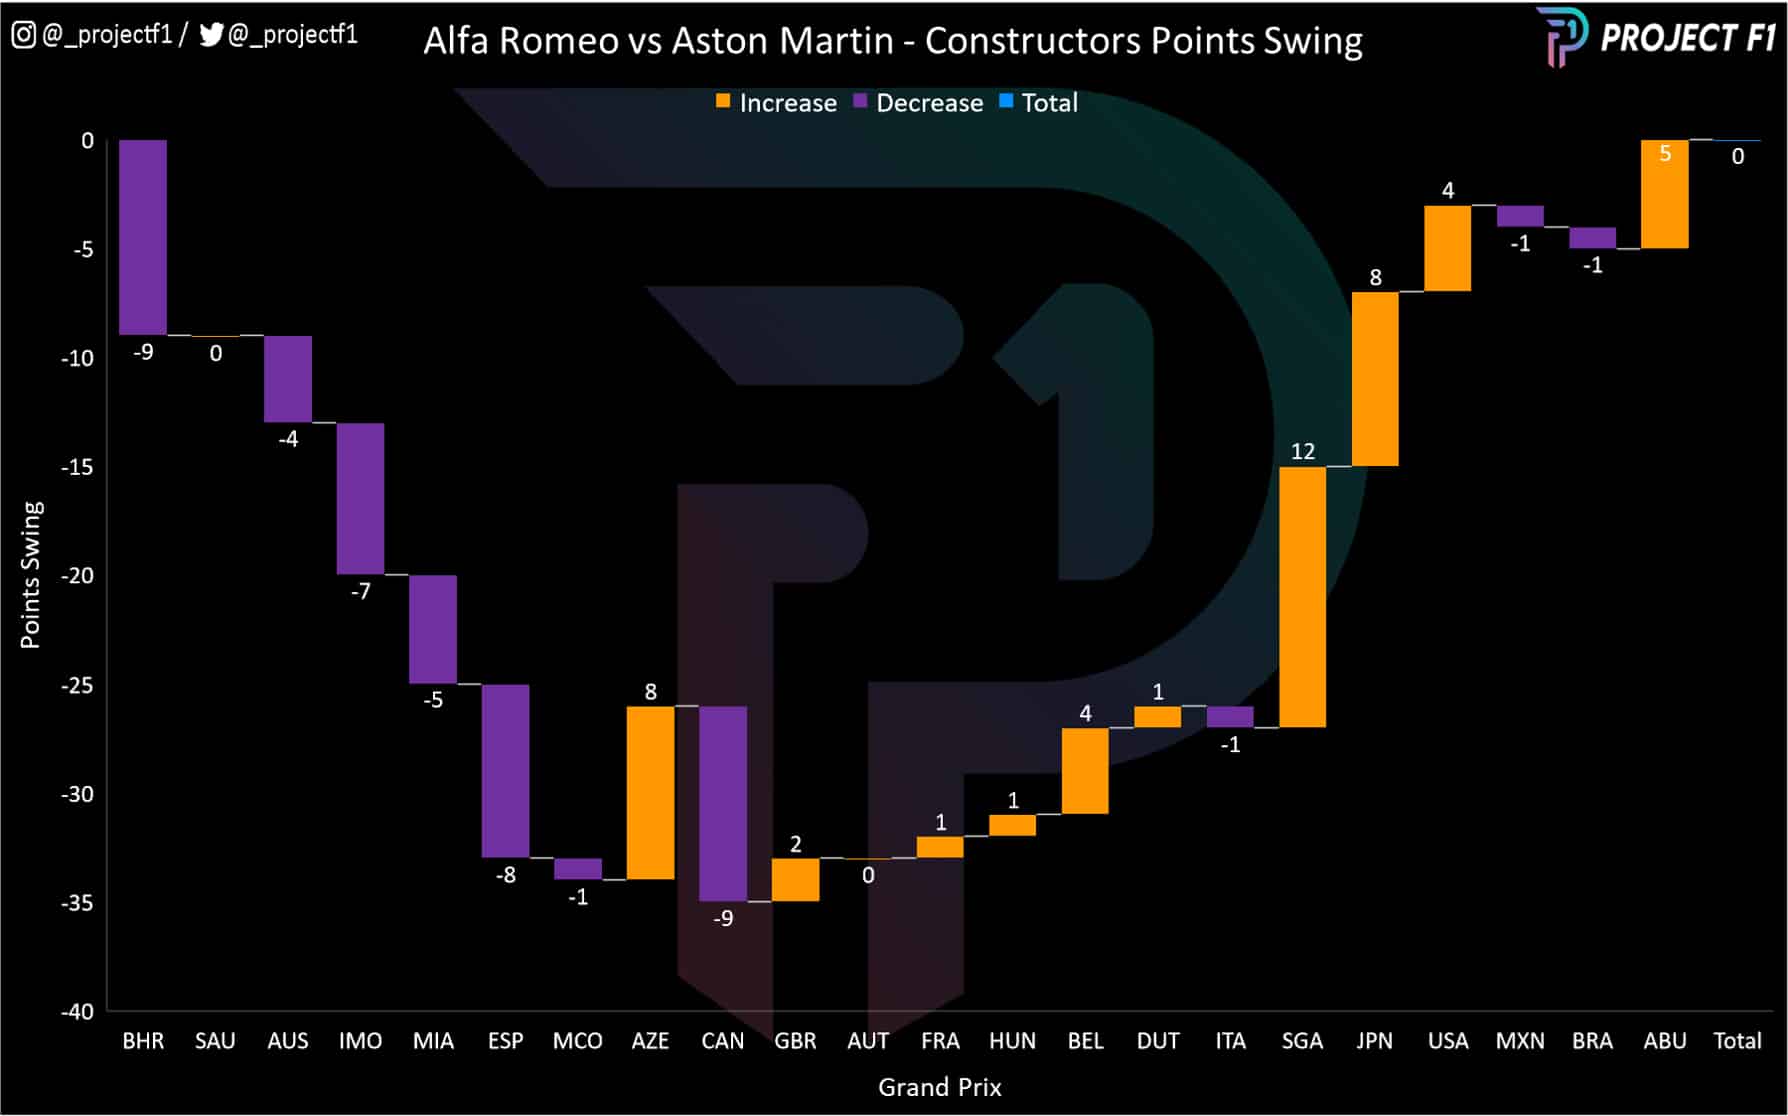 Alfa vs Aston constructors points swing